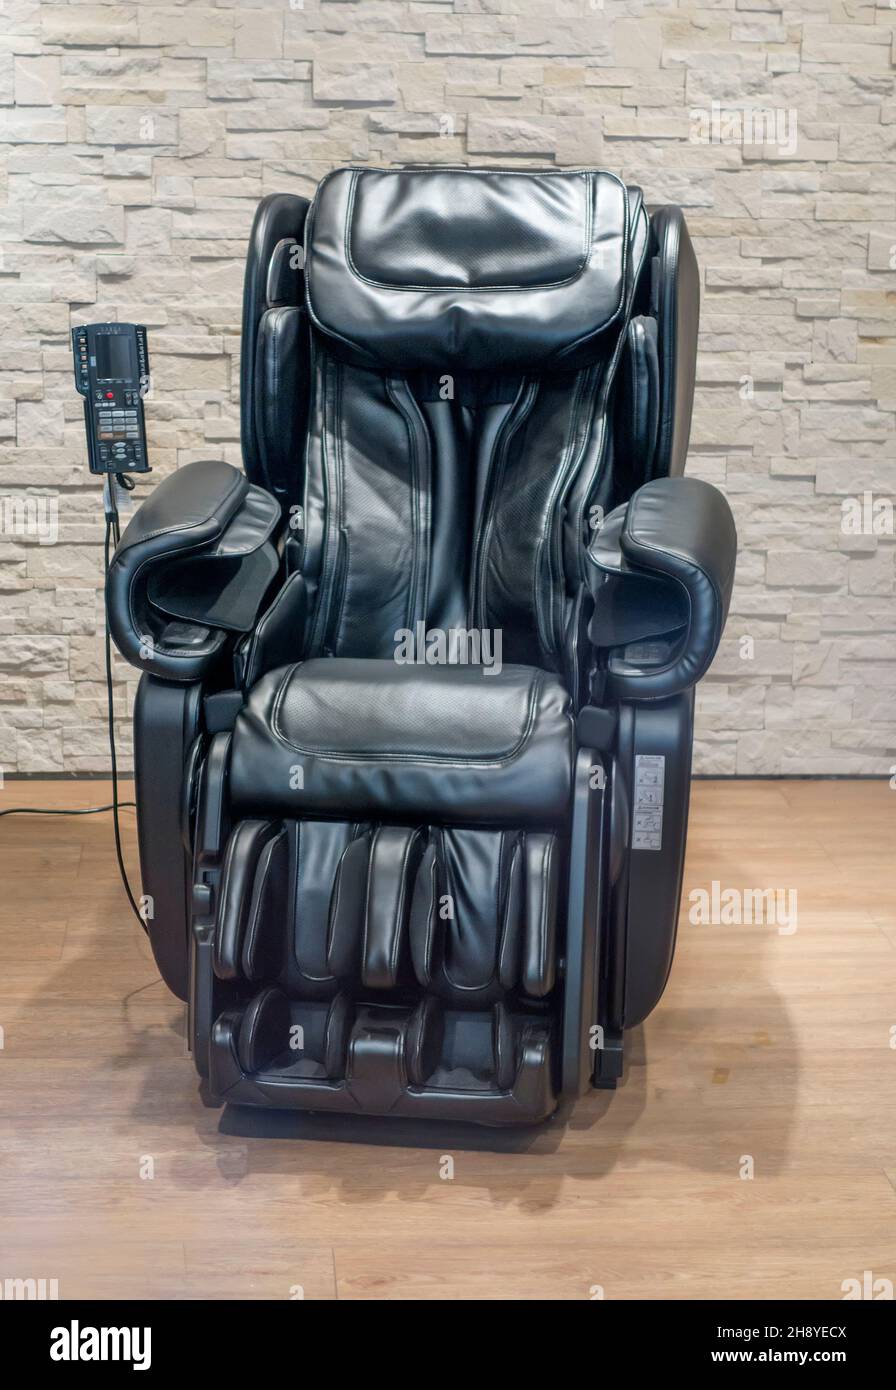 Black robotic massage chair Stock Photo